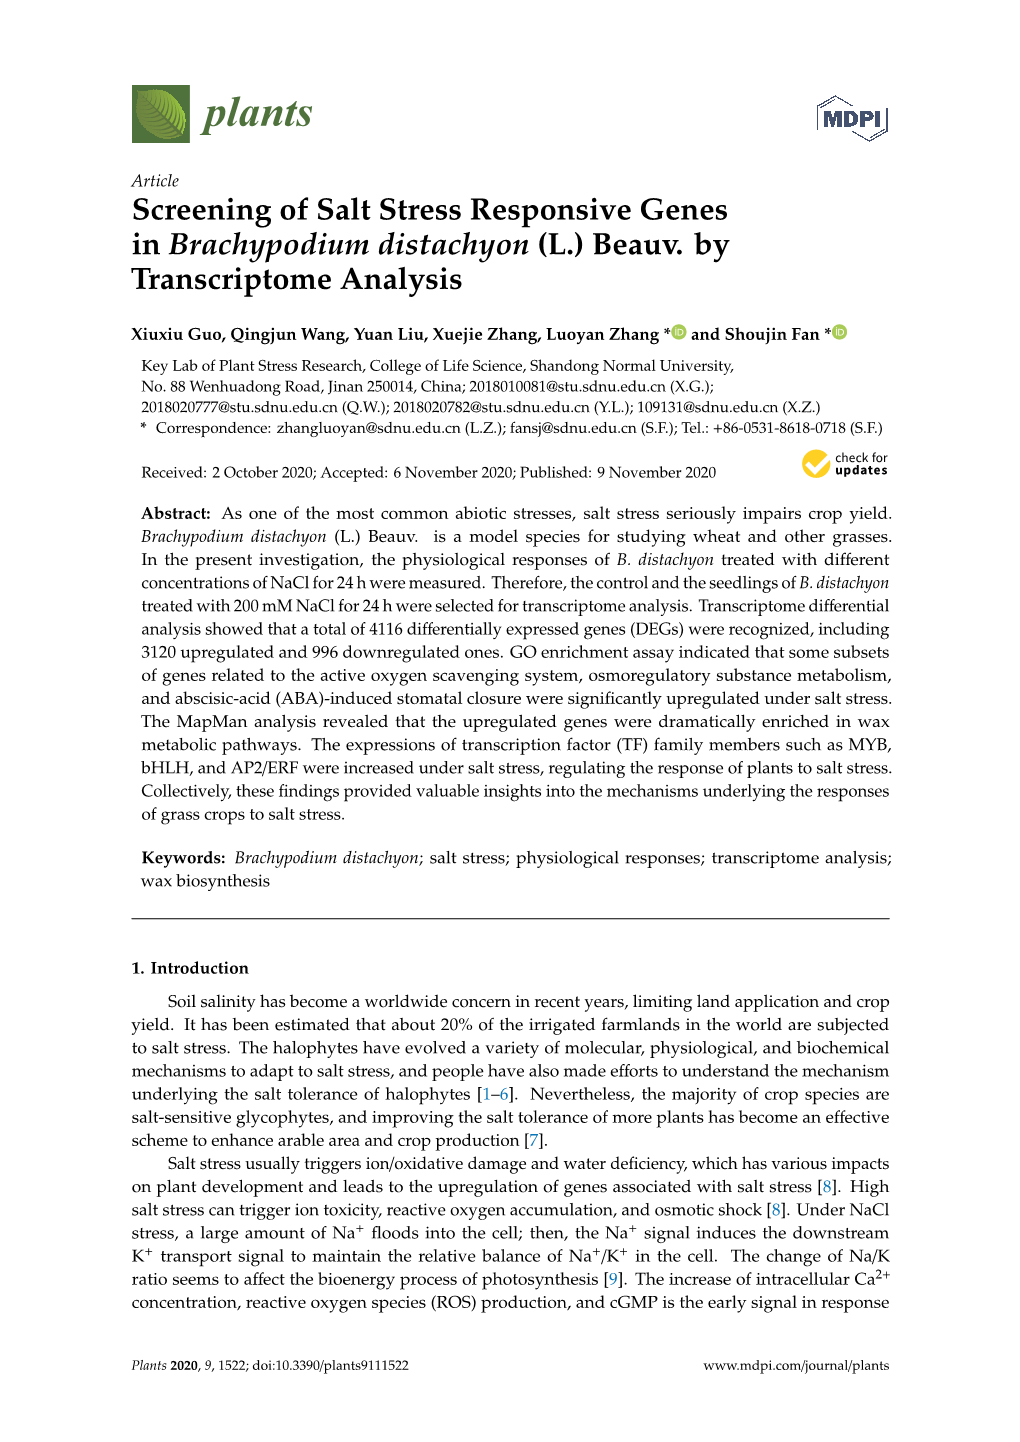 Screening of Salt Stress Responsive Genes in Brachypodium Distachyon (L.) Beauv